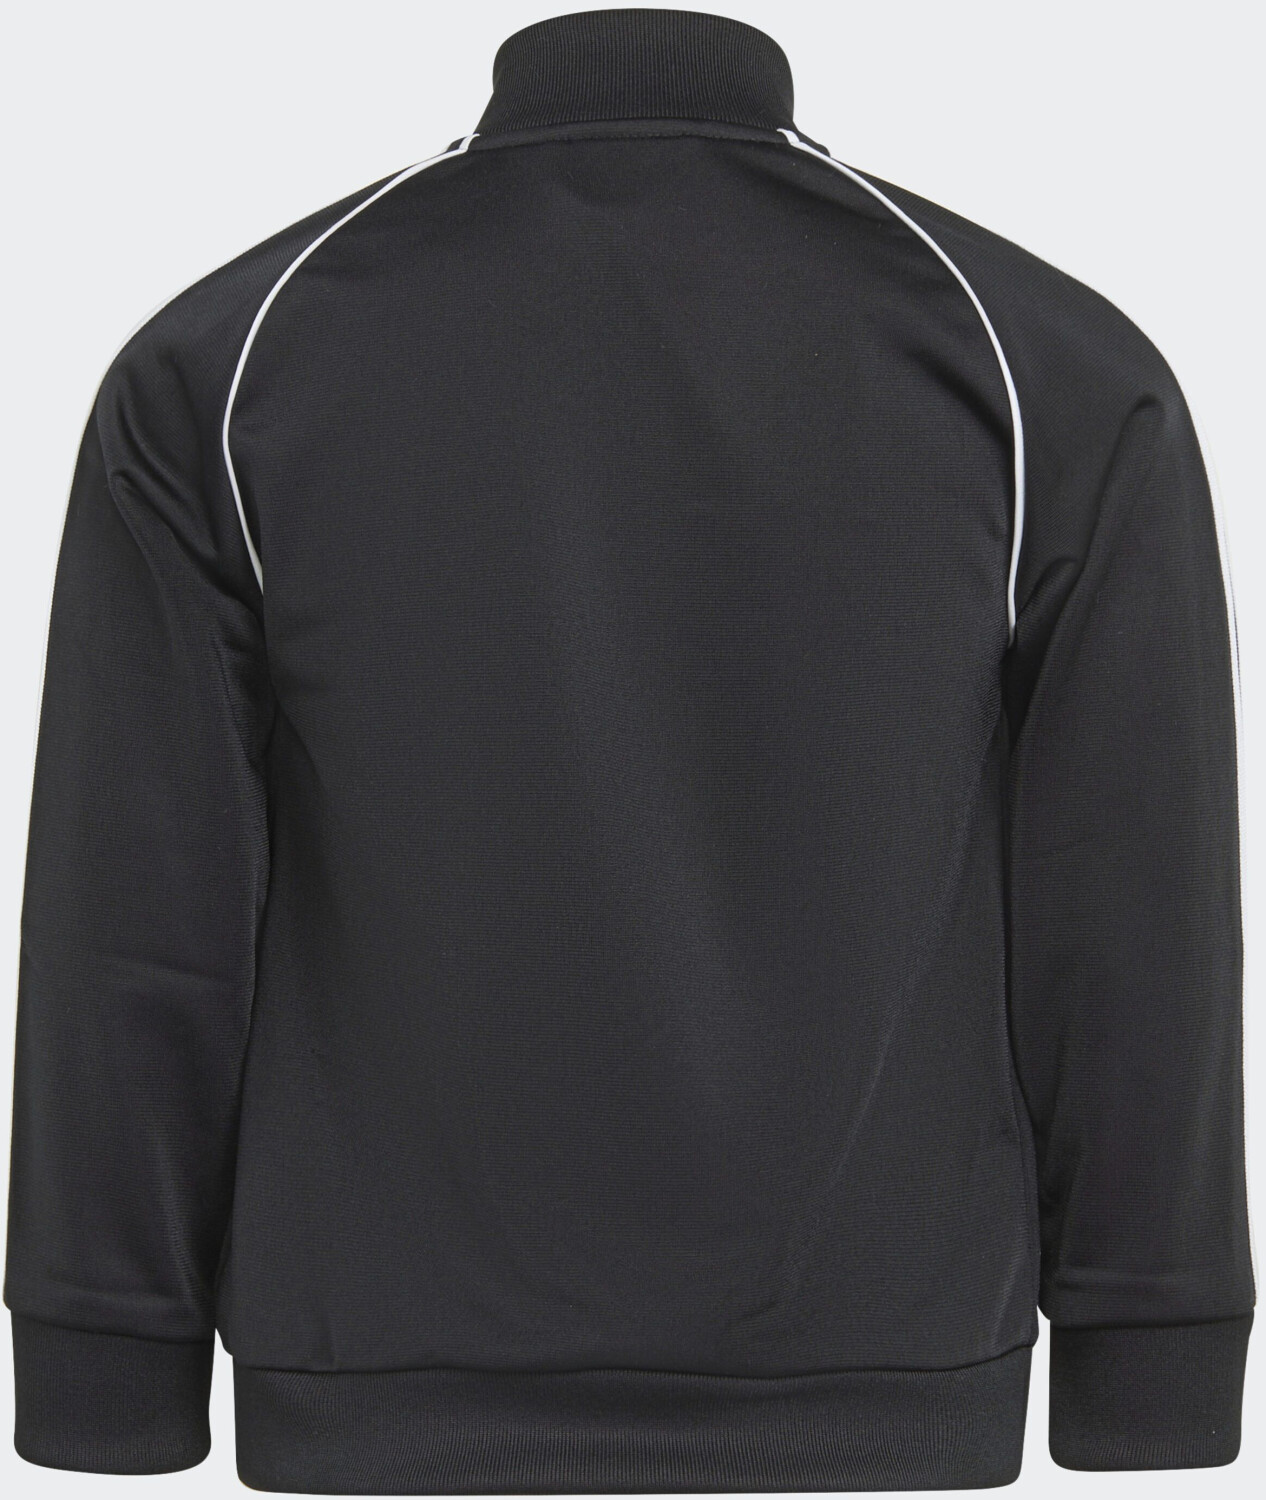 Adidas Adicolor SST black/white 50,40 € bei ab (H25260) Trainingsanzug Preisvergleich 